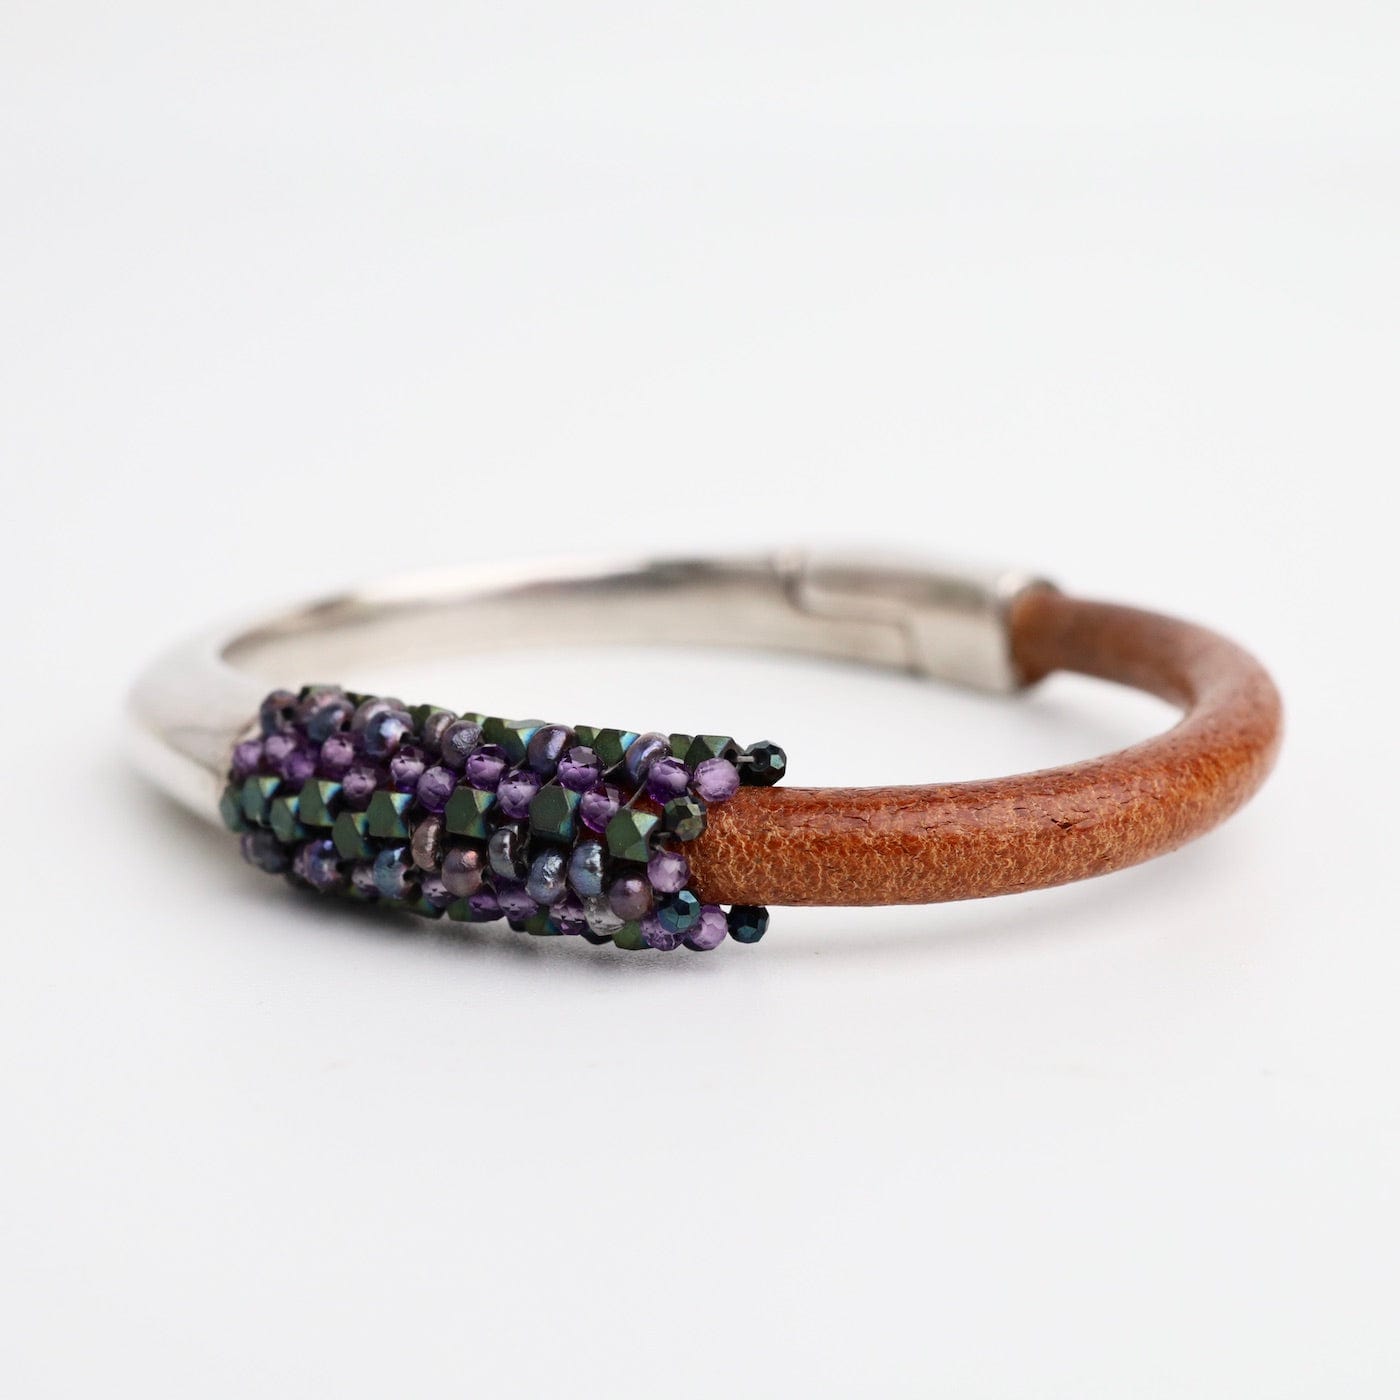 BRC-JM Hand Stitched Matte Green Hematite, Amethyst, Mystic Topaz & Lavender Pearls on 1/2 Cuff Bracelet